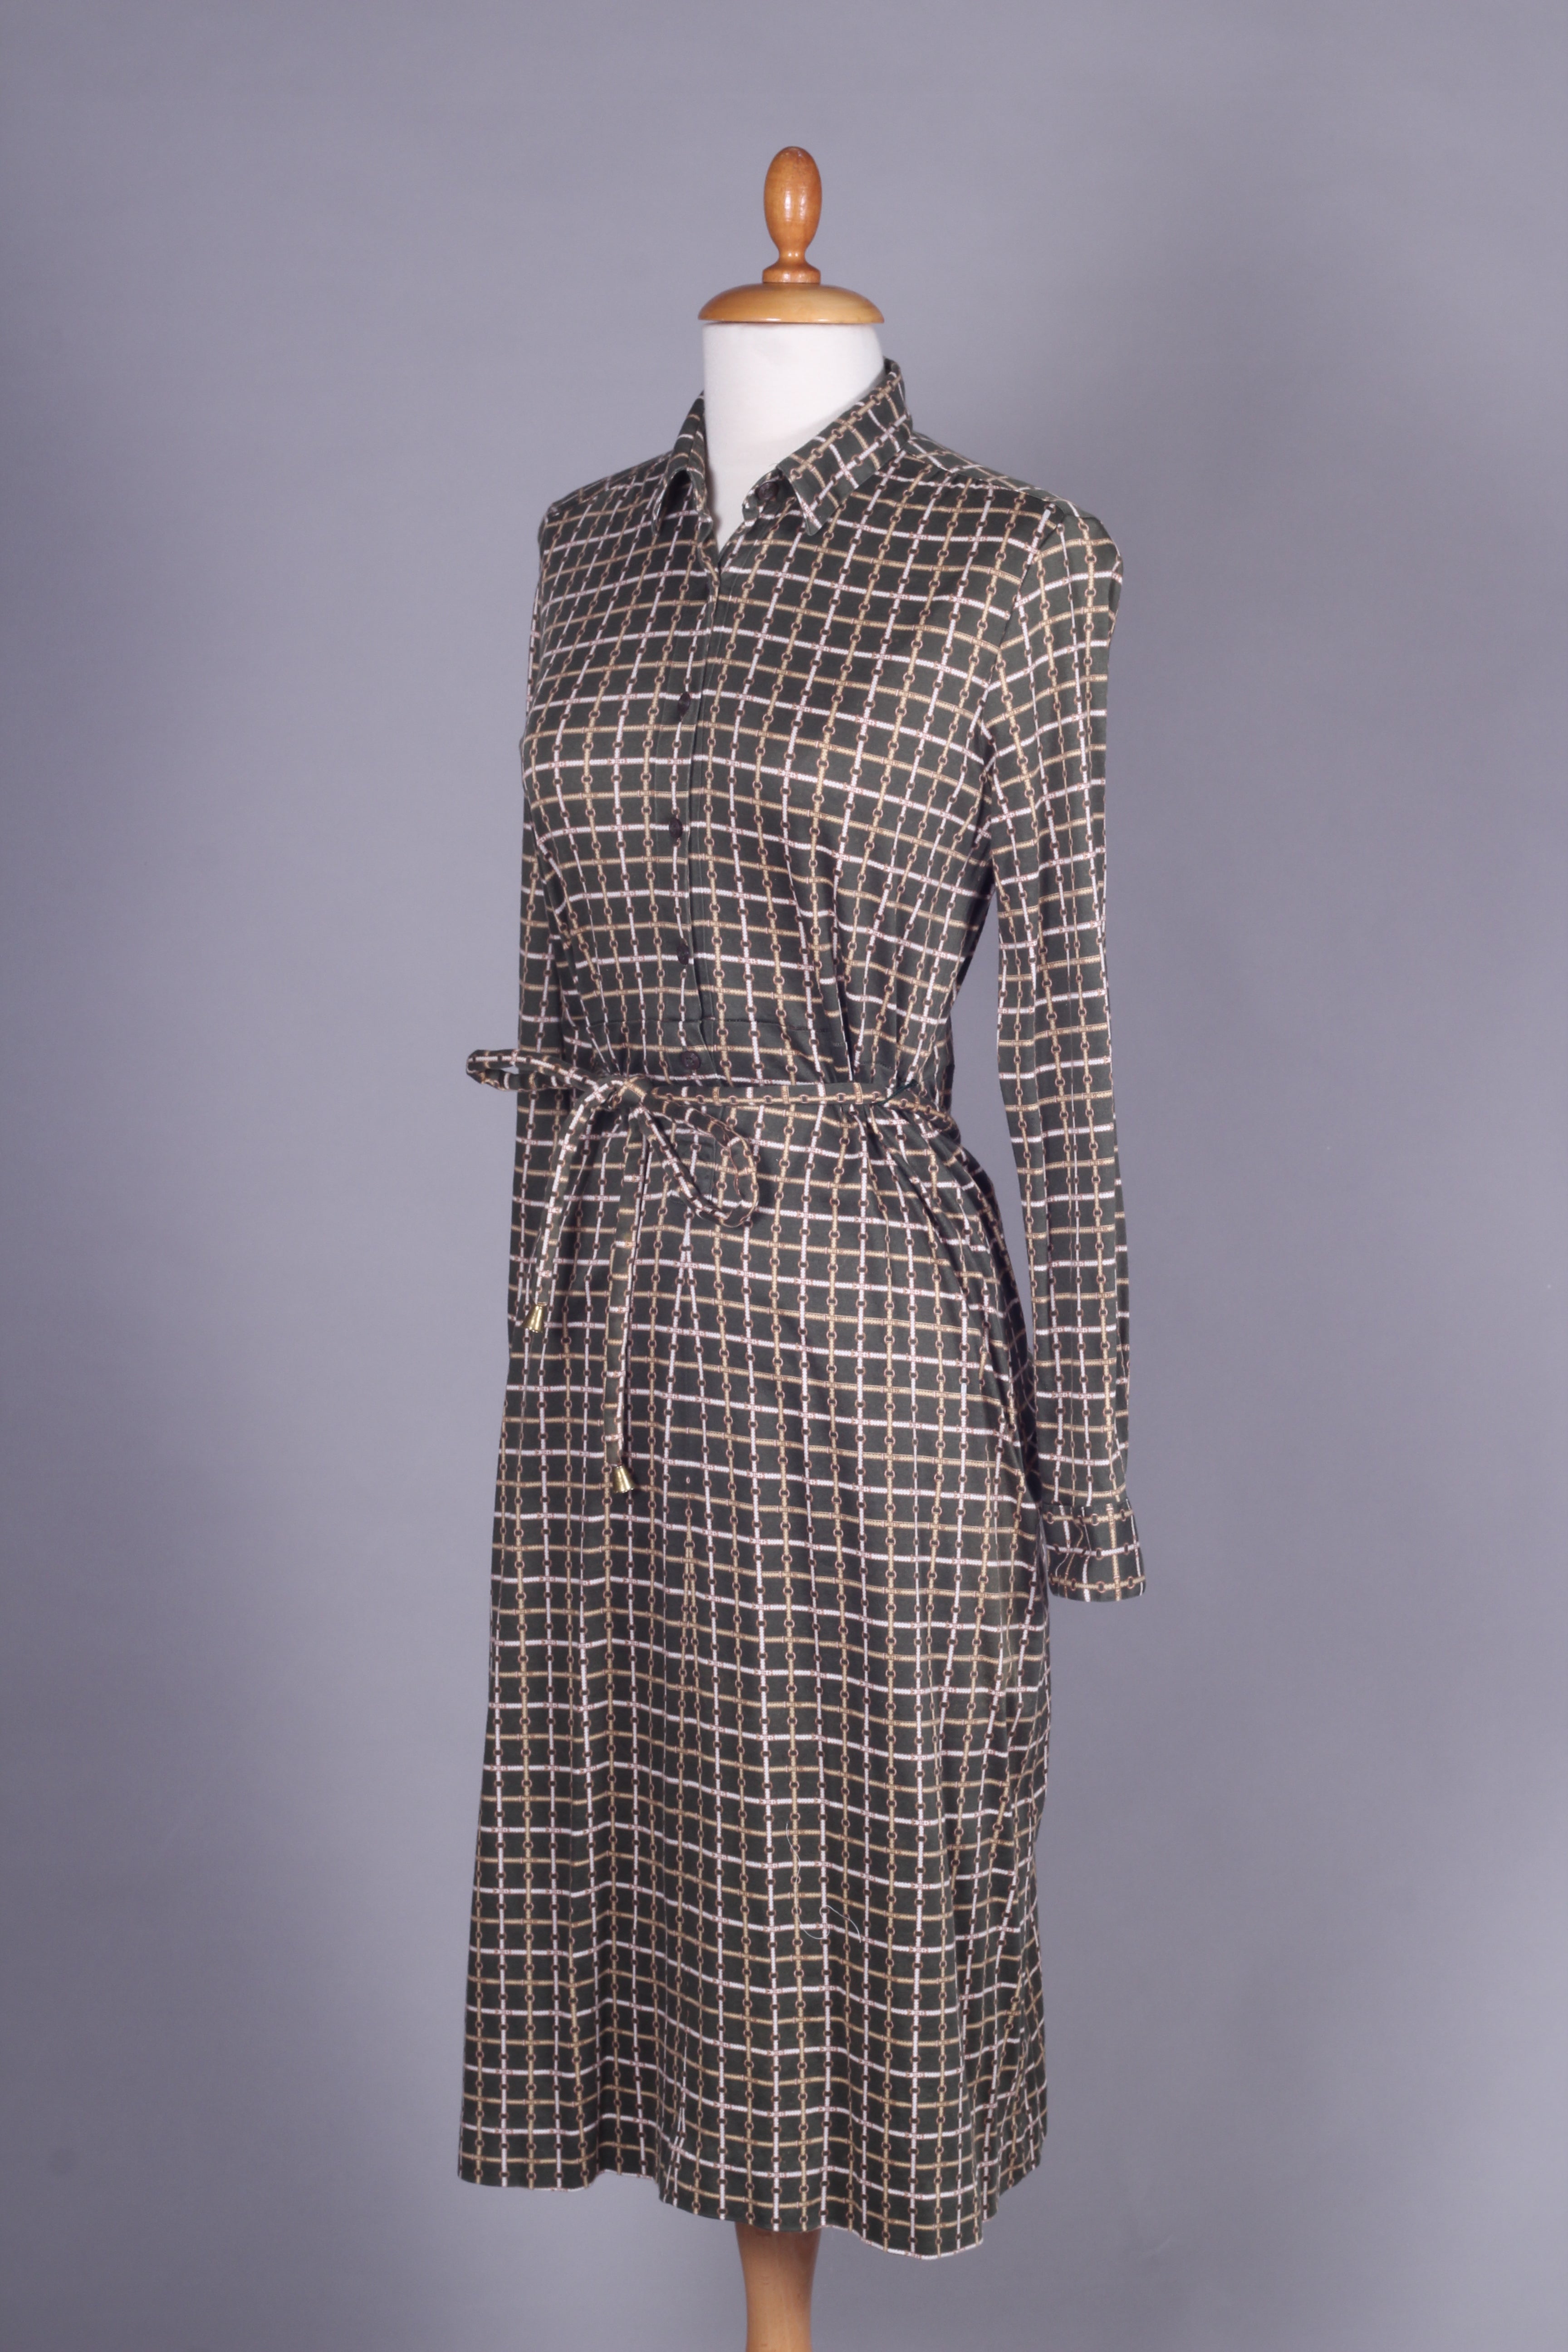 Lady Manhattan Jersey kjole med print. 1970. S-M